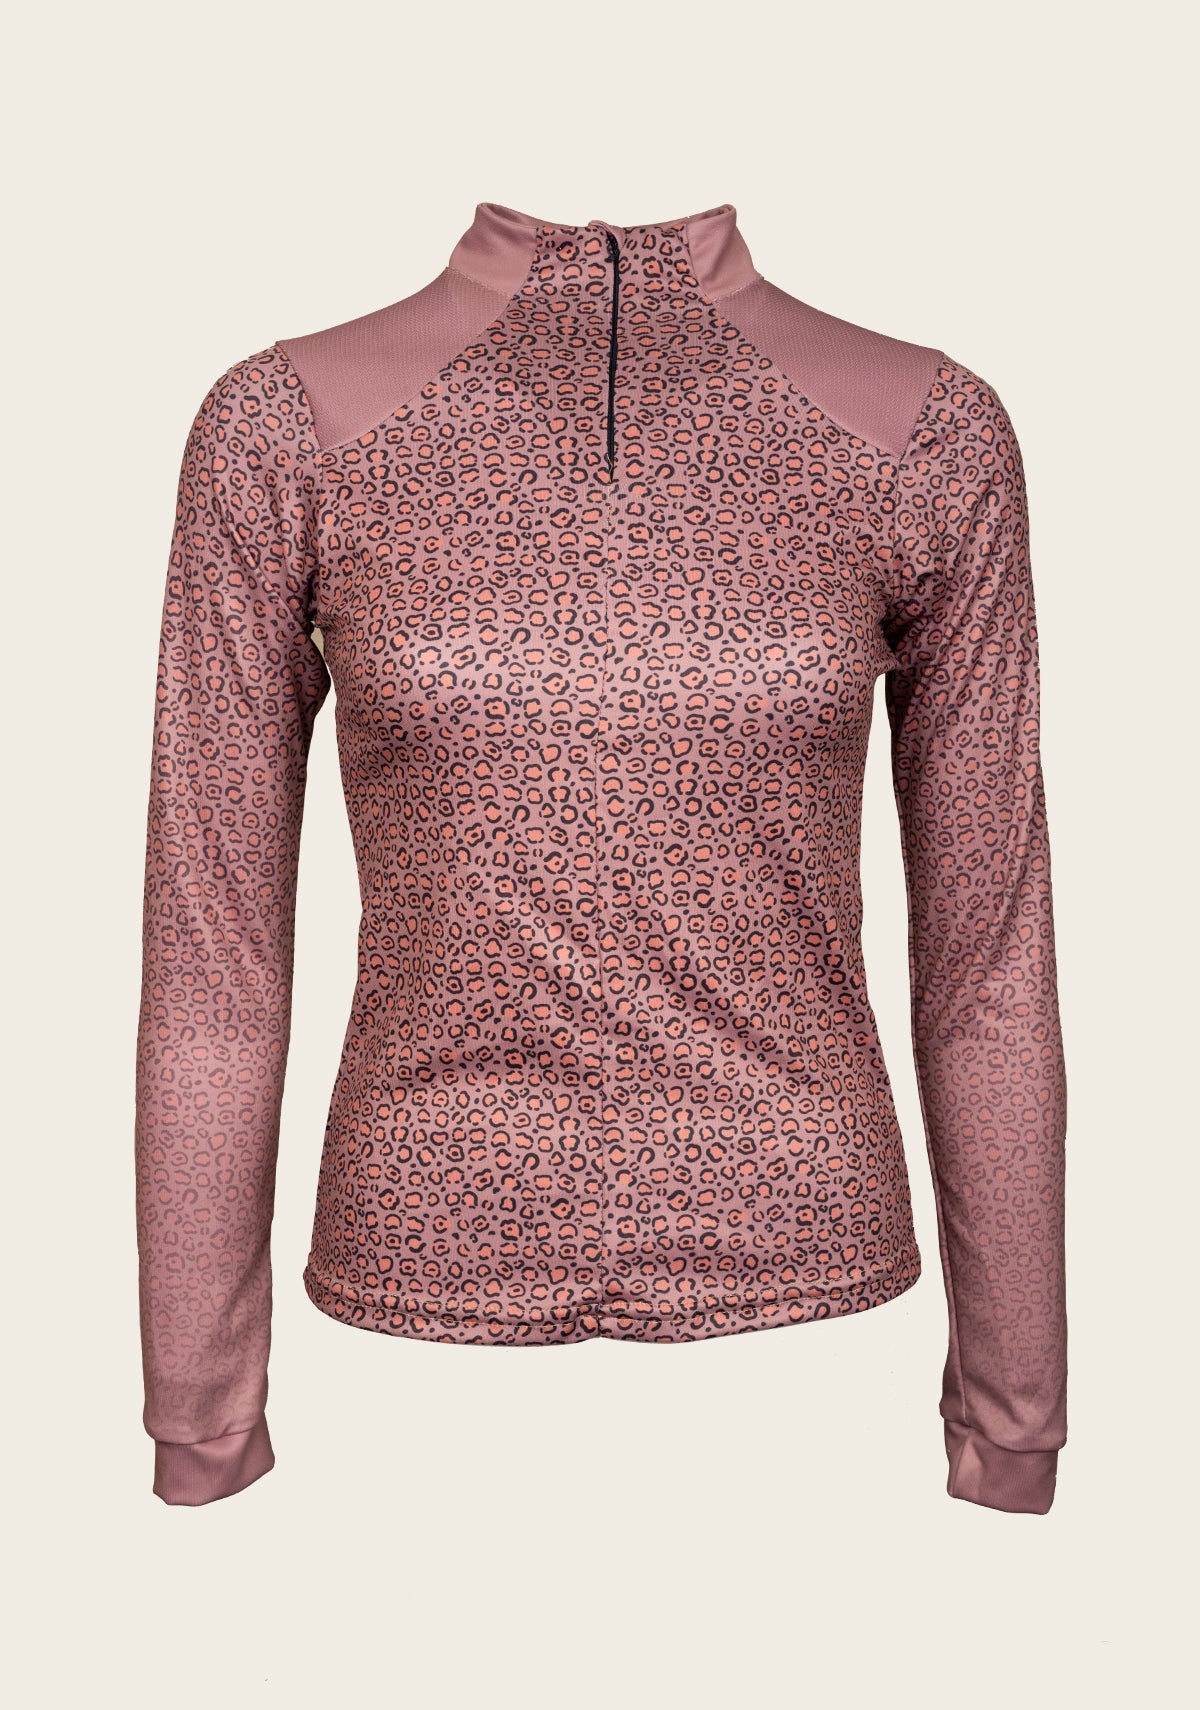 Leopard in Rose Sport Sun Shirt